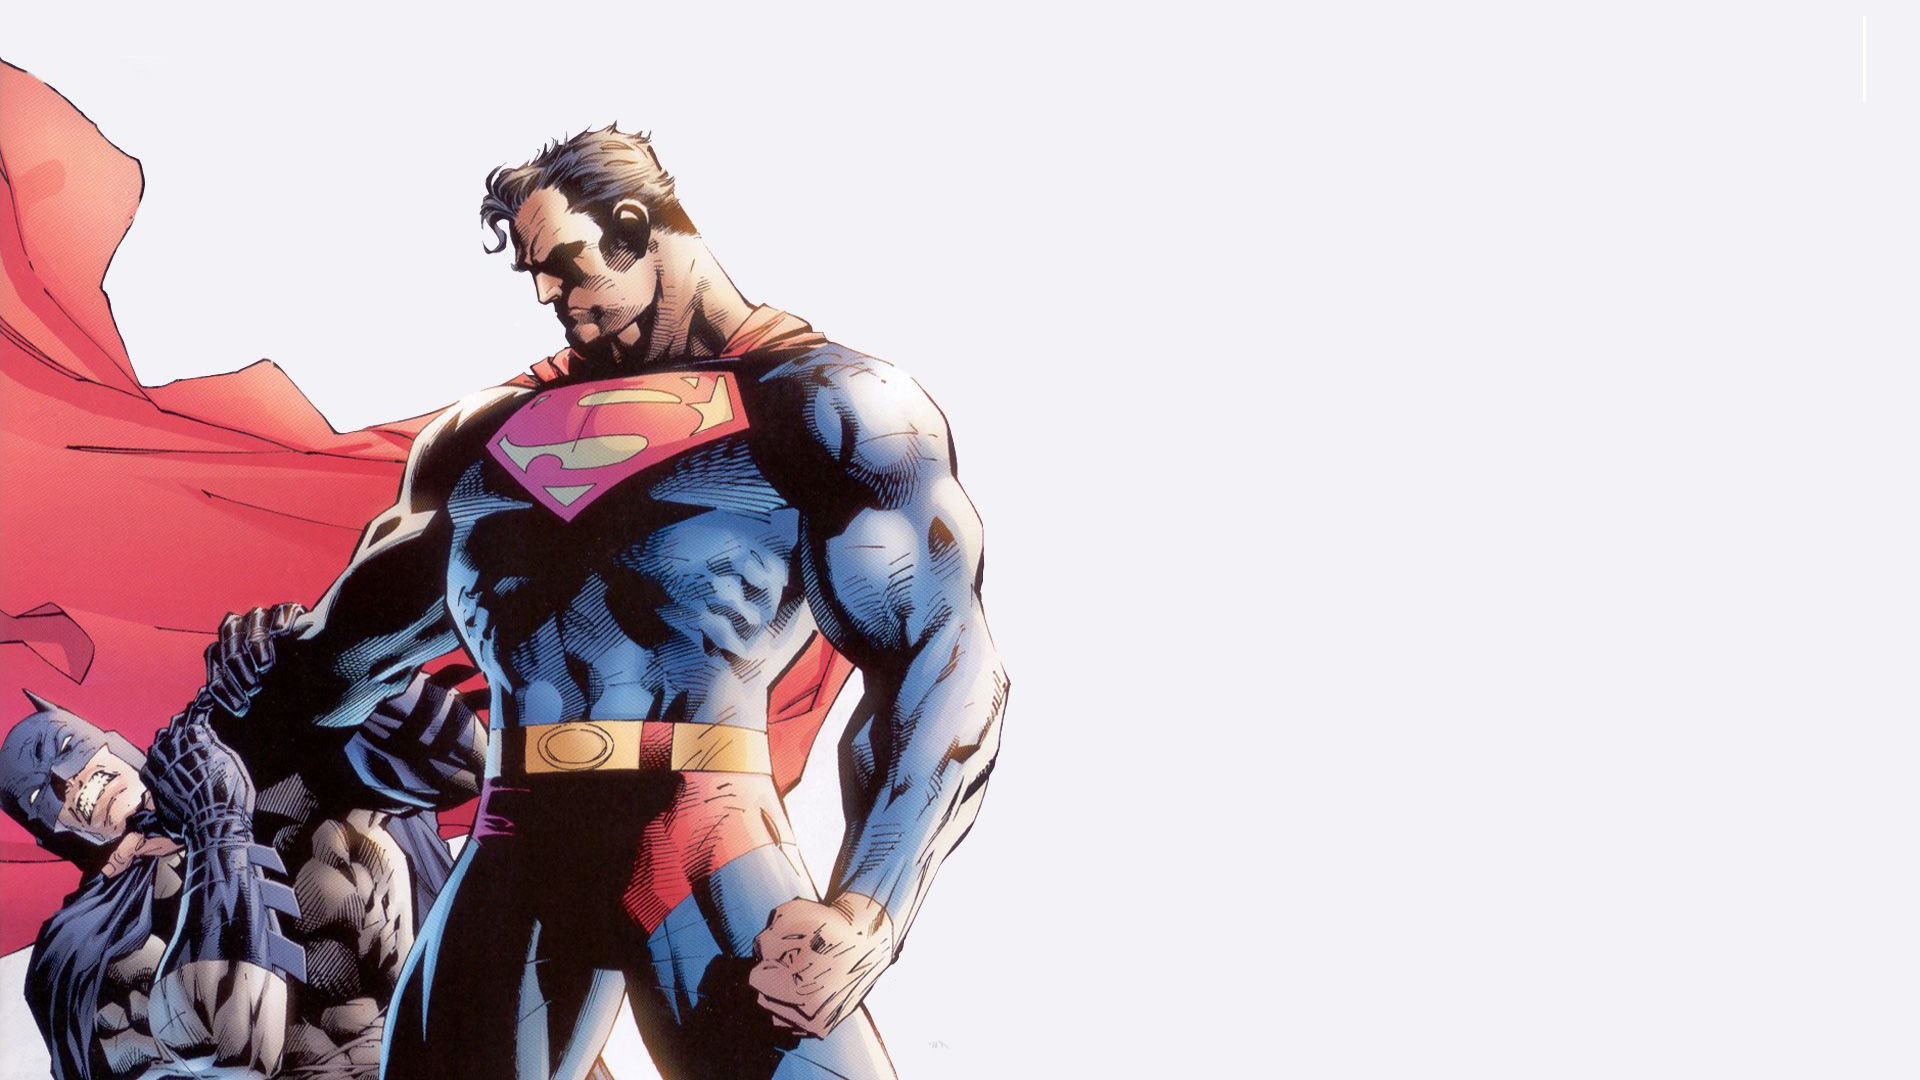 6 Batman Vs. Superman HD Wallpapers | Backgrounds - Wallpaper Abyss